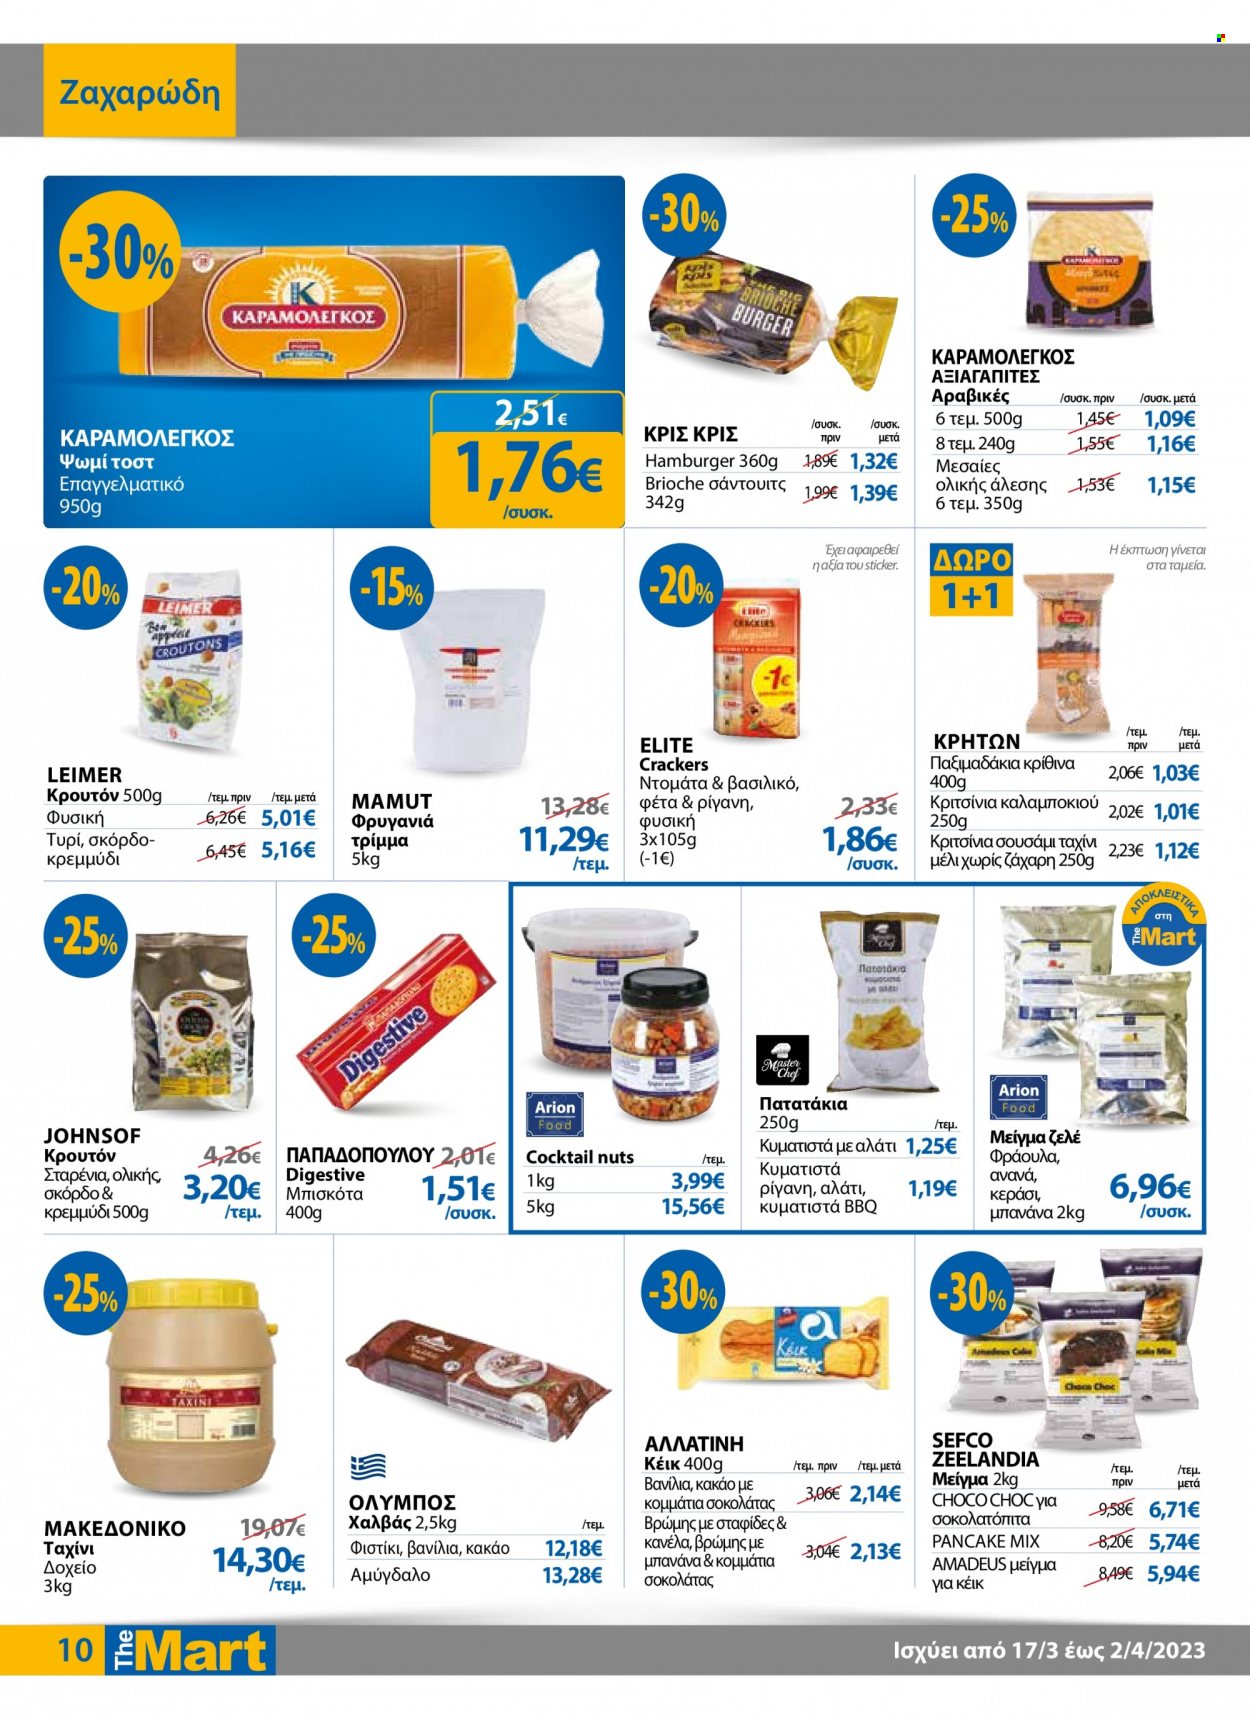 thumbnail - Φυλλάδια The Mart - 17.03.2023 - 02.04.2023 - Εκπτωτικά προϊόντα - κέικ, μπισκότα, ντομάτα, σκόρδο, καλαμπόκι, πατατάκια, μέλι. Σελίδα 10.